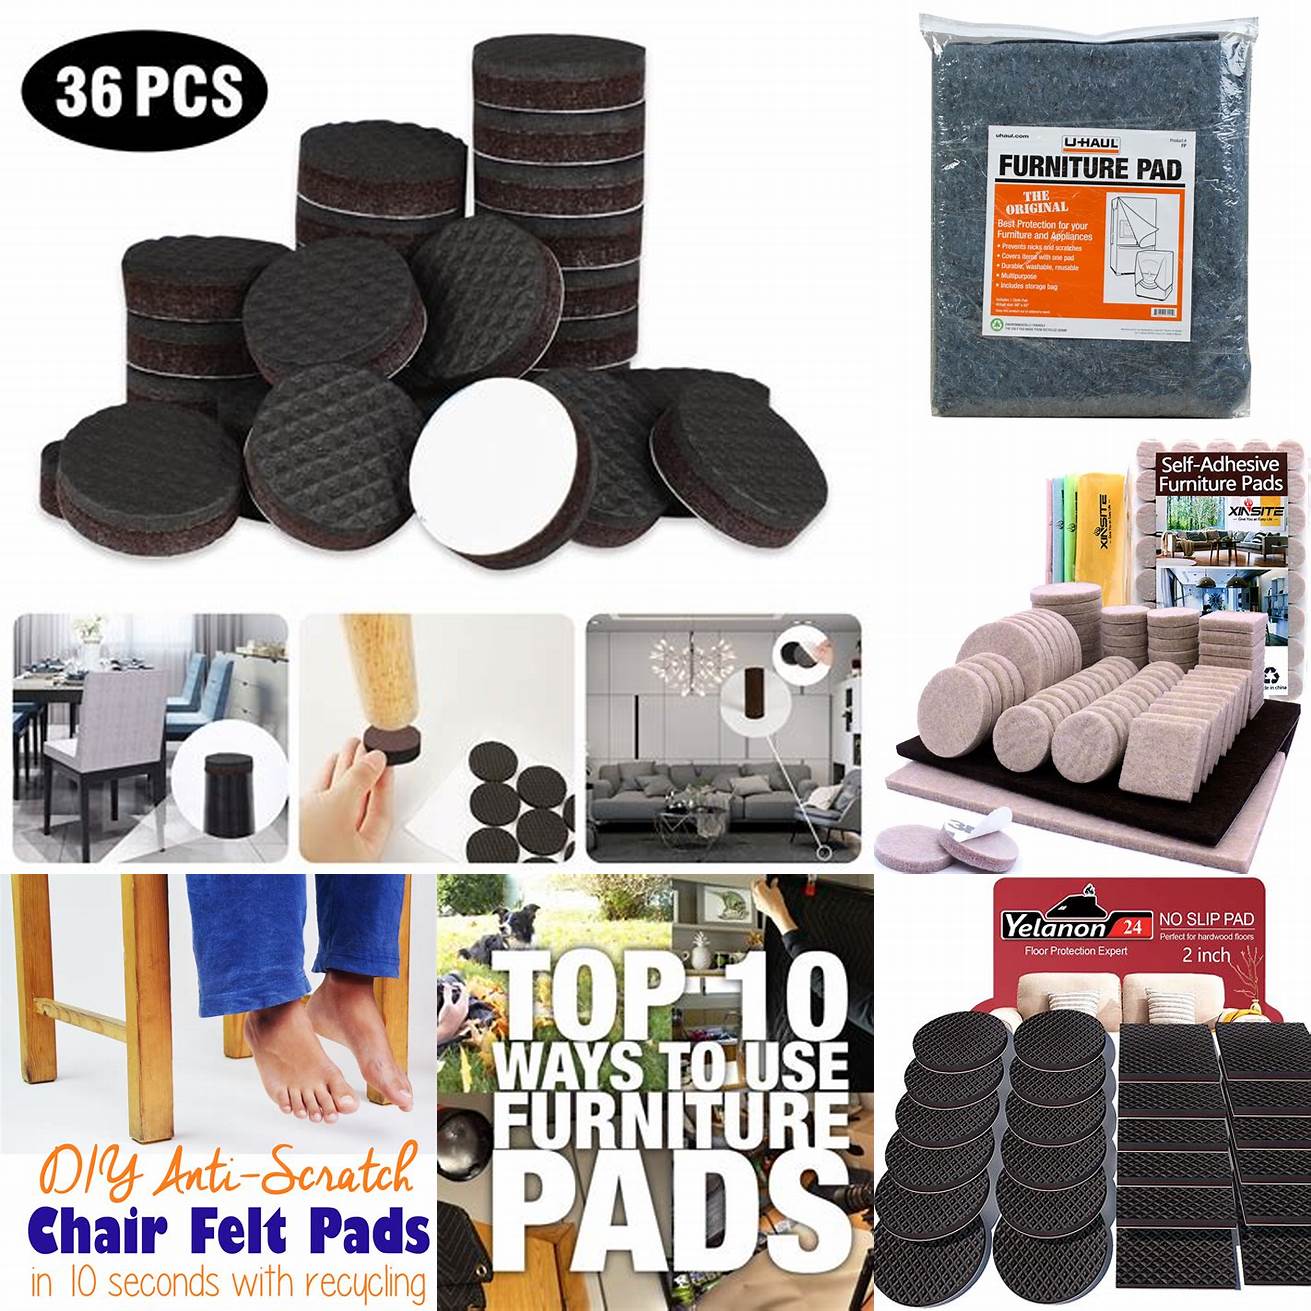 Use furniture pads